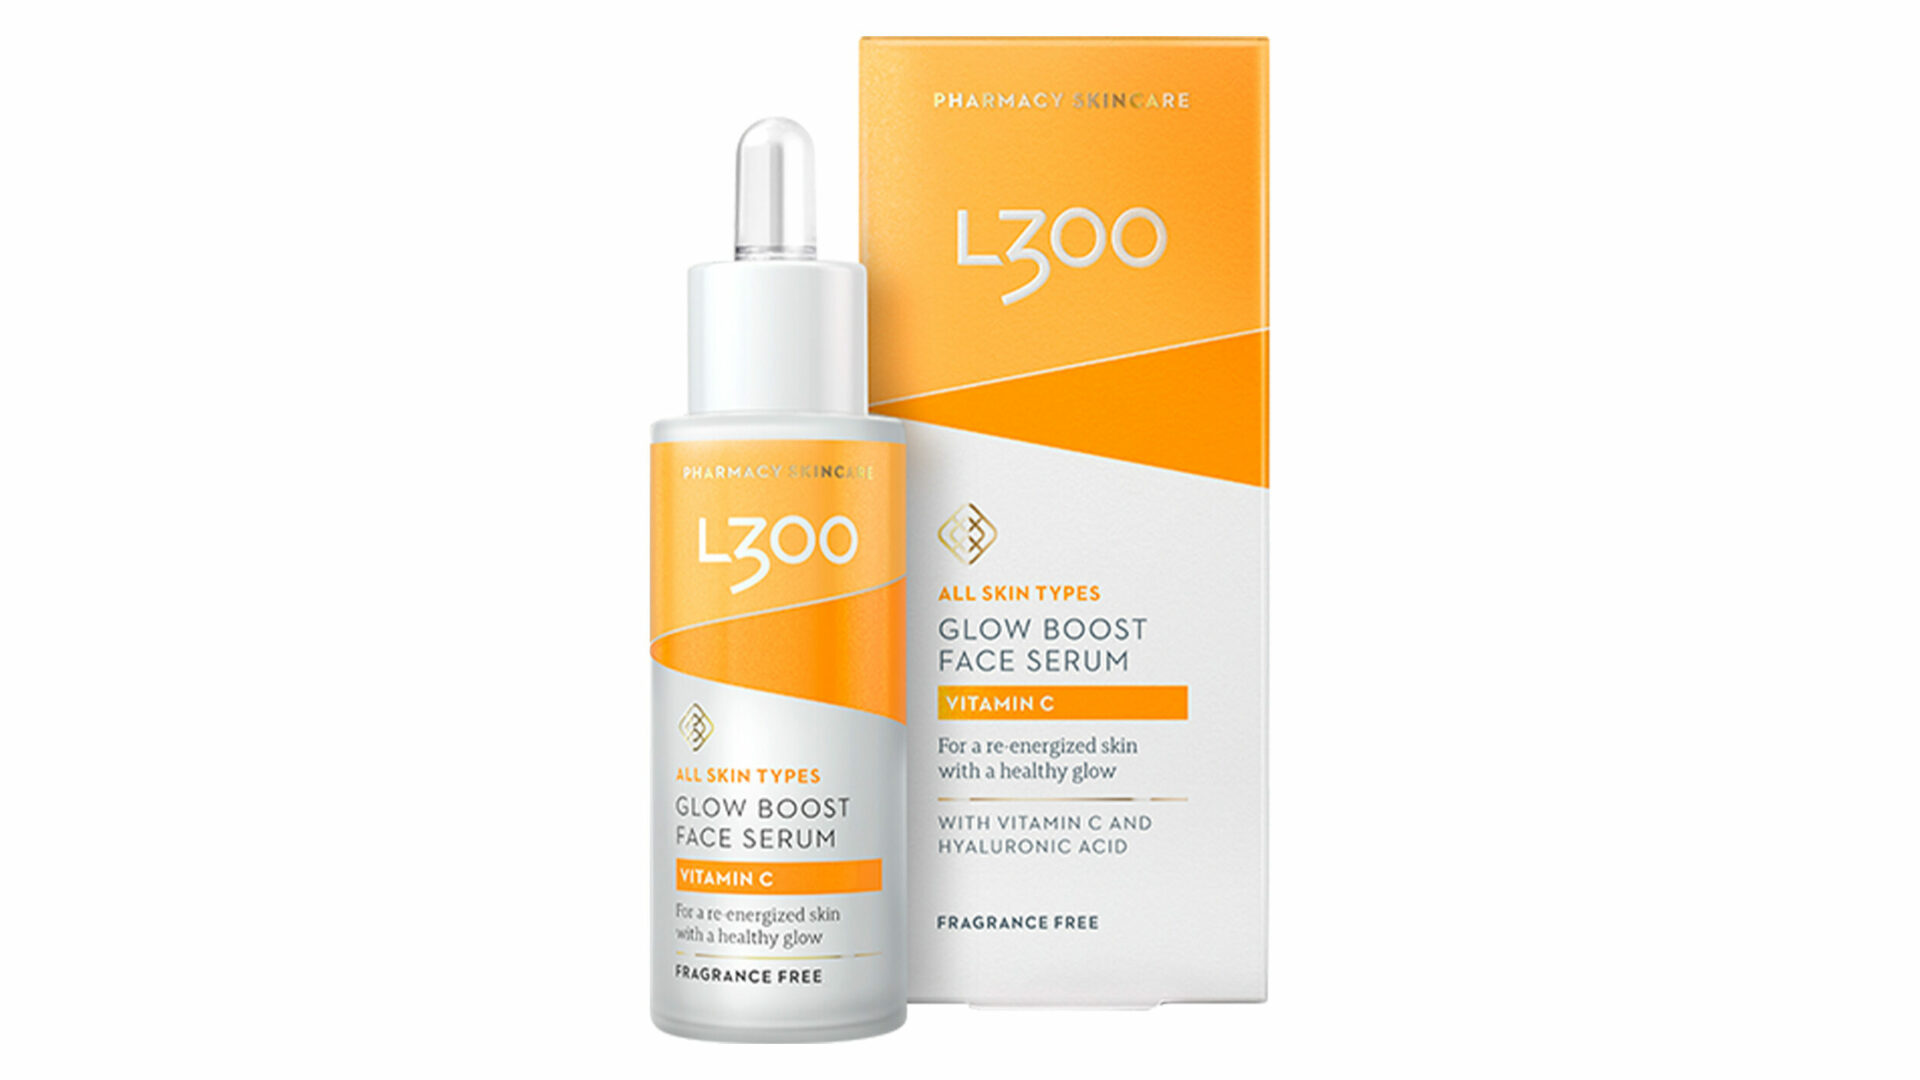 L300-Glow-boost-face-Serum-Vitamin-C-aspect-ratio-16-9